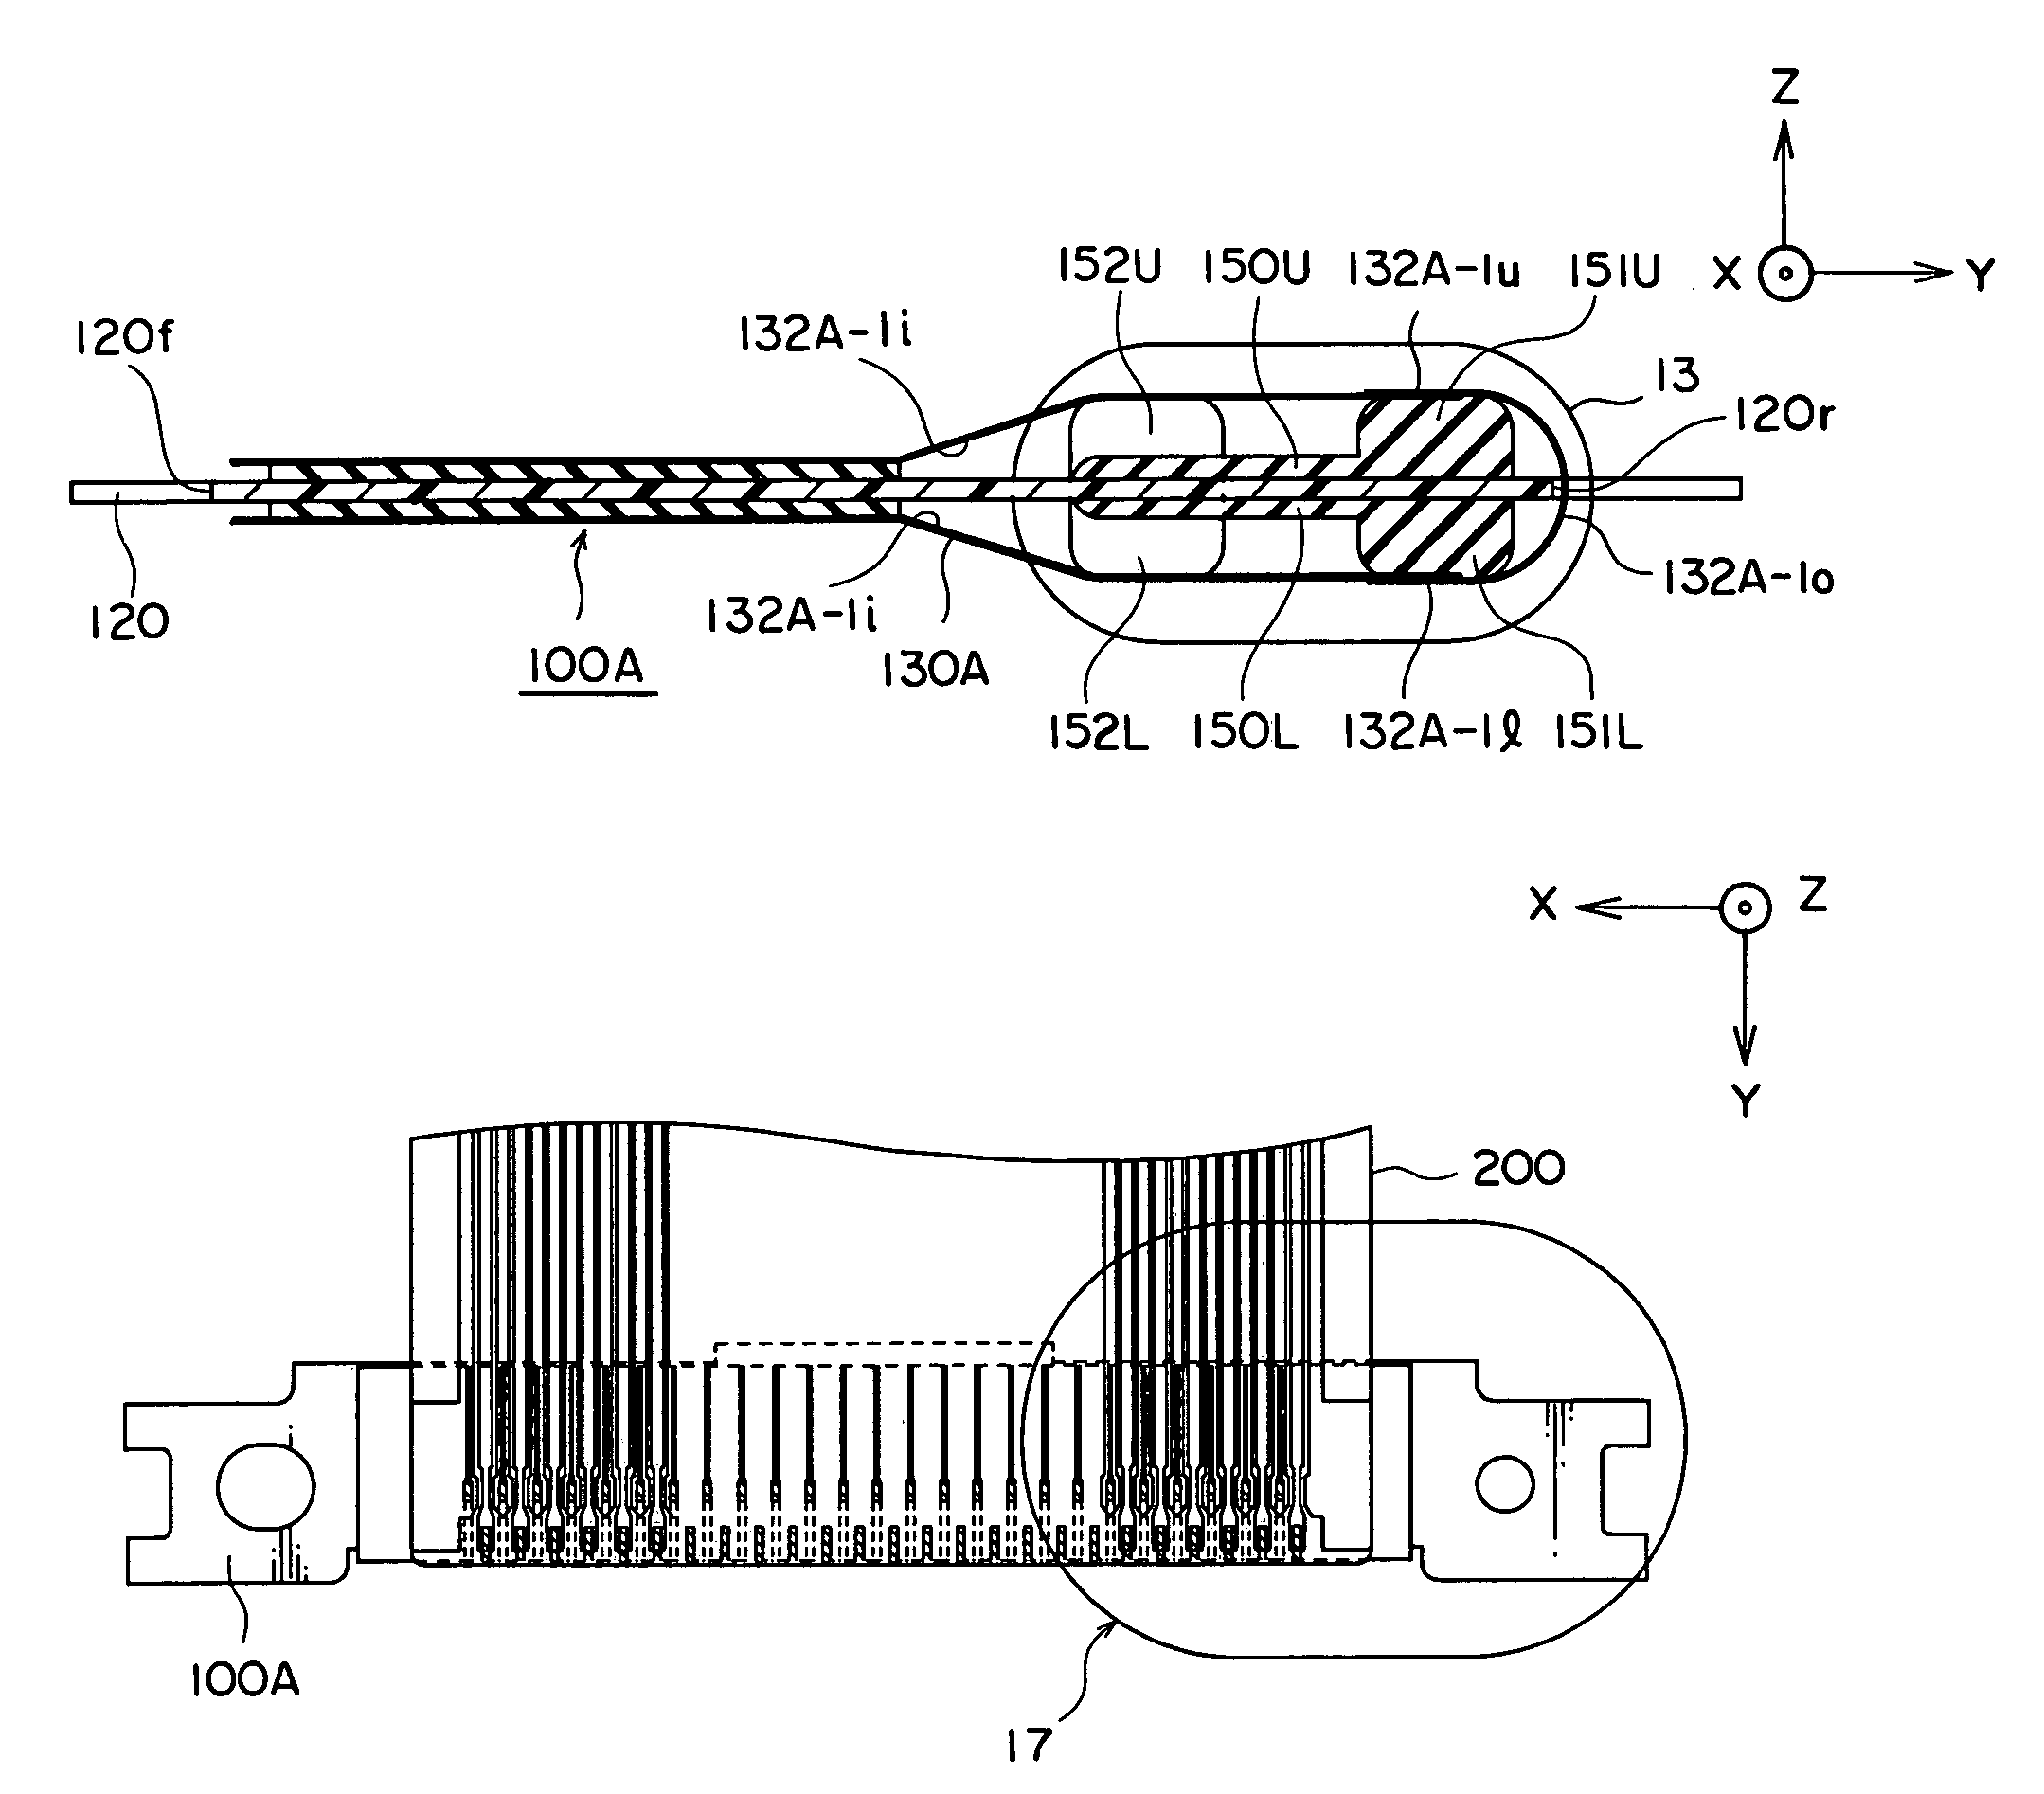 Intermediate connector